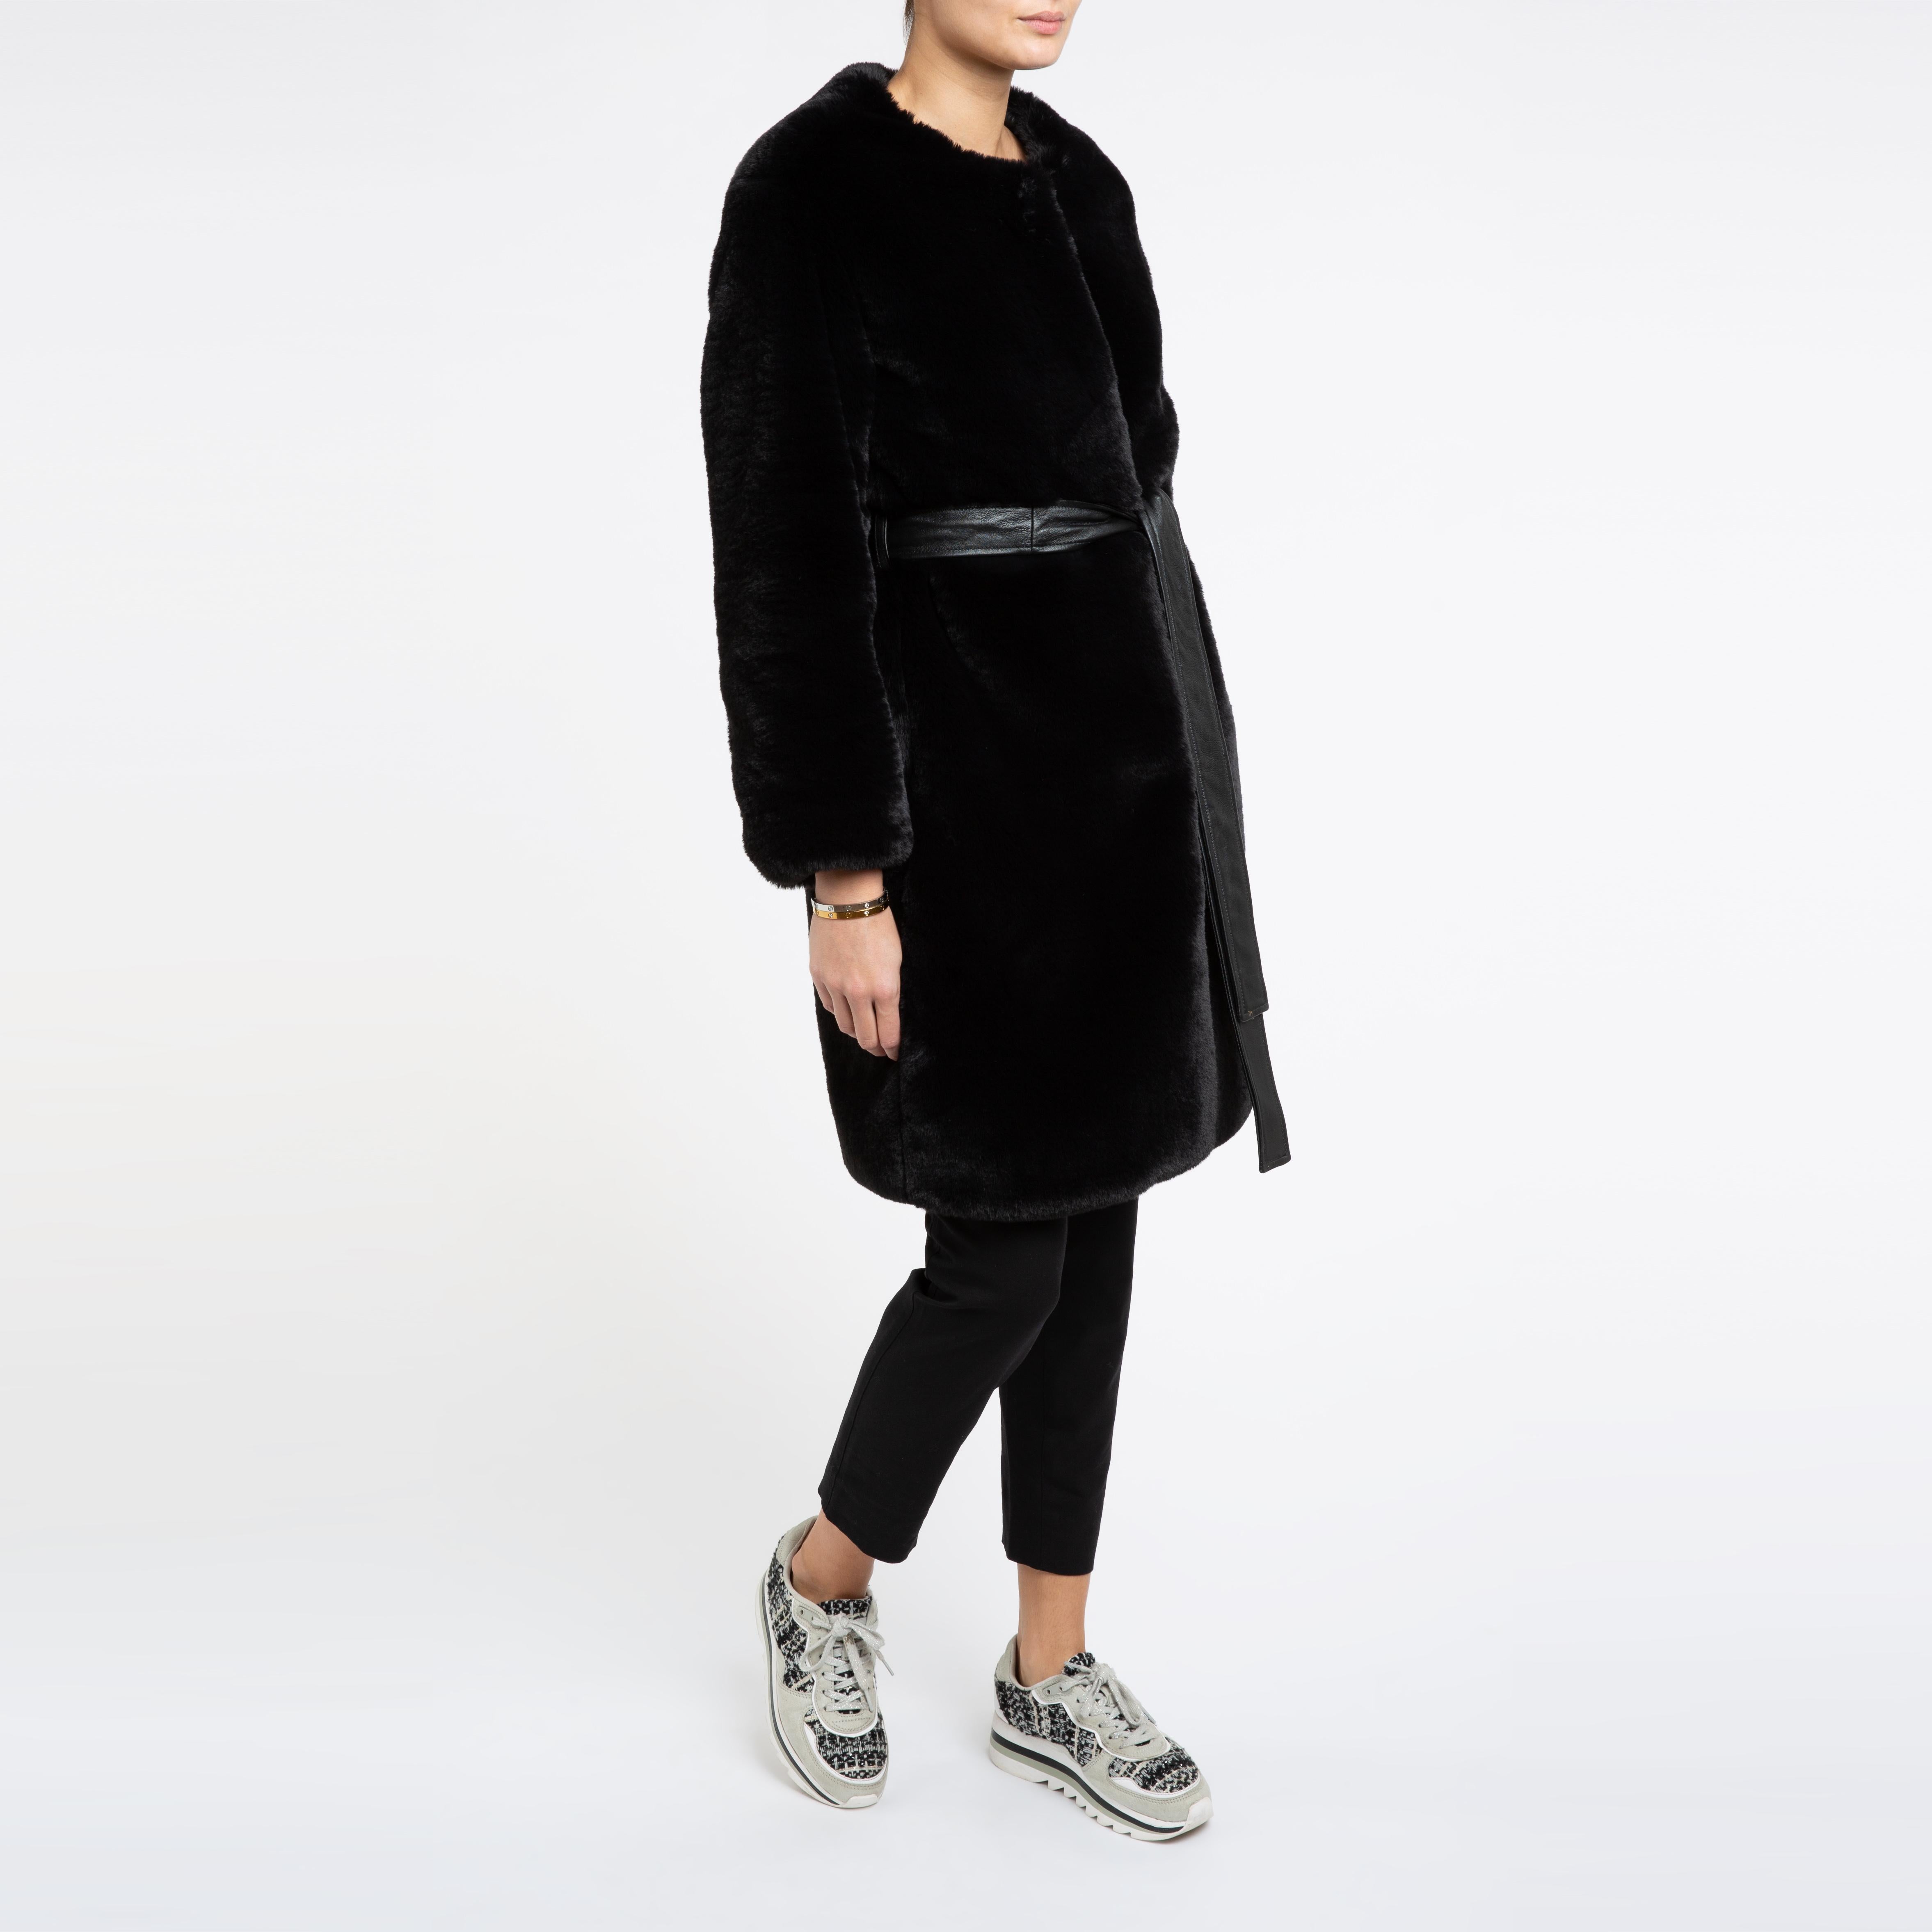 Verheyen London Serena  Collarless Faux Fur Coat in Black - Size uk 12  1